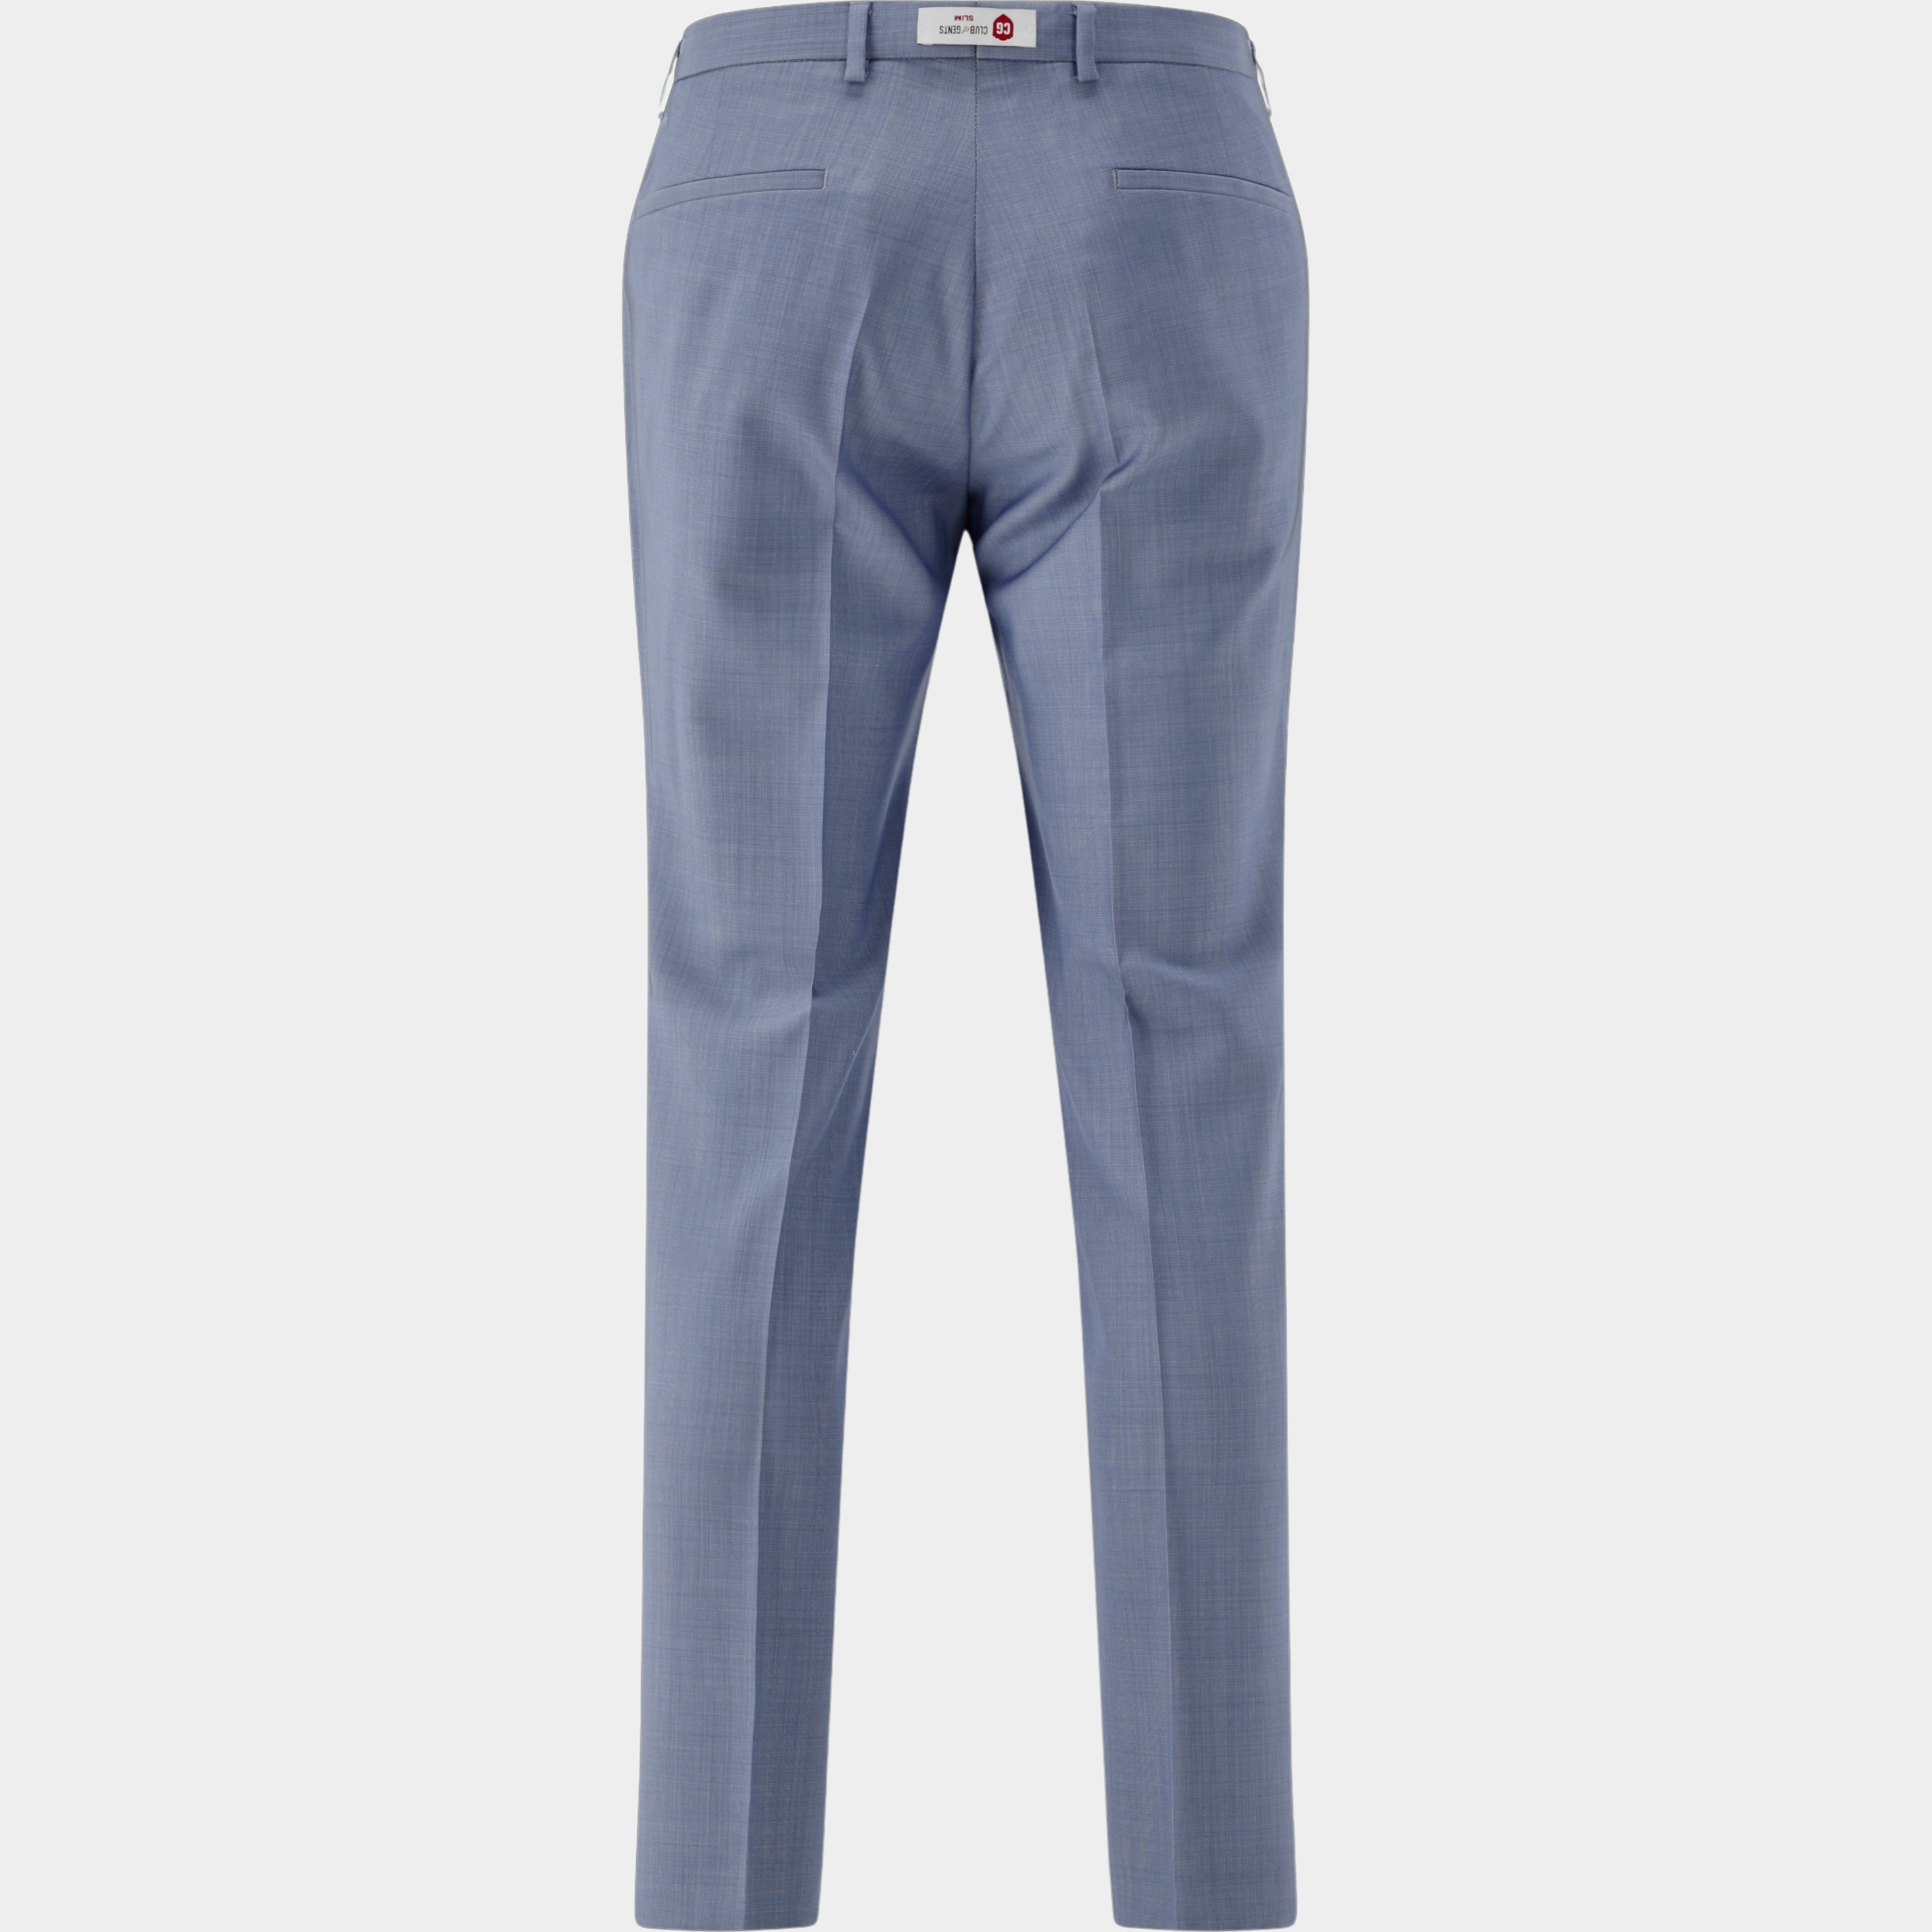 Club of Gents Pantalon Mix & Match Blauw Hose/Trousers CG Pascal-ST 10.158S0 / 431063/61